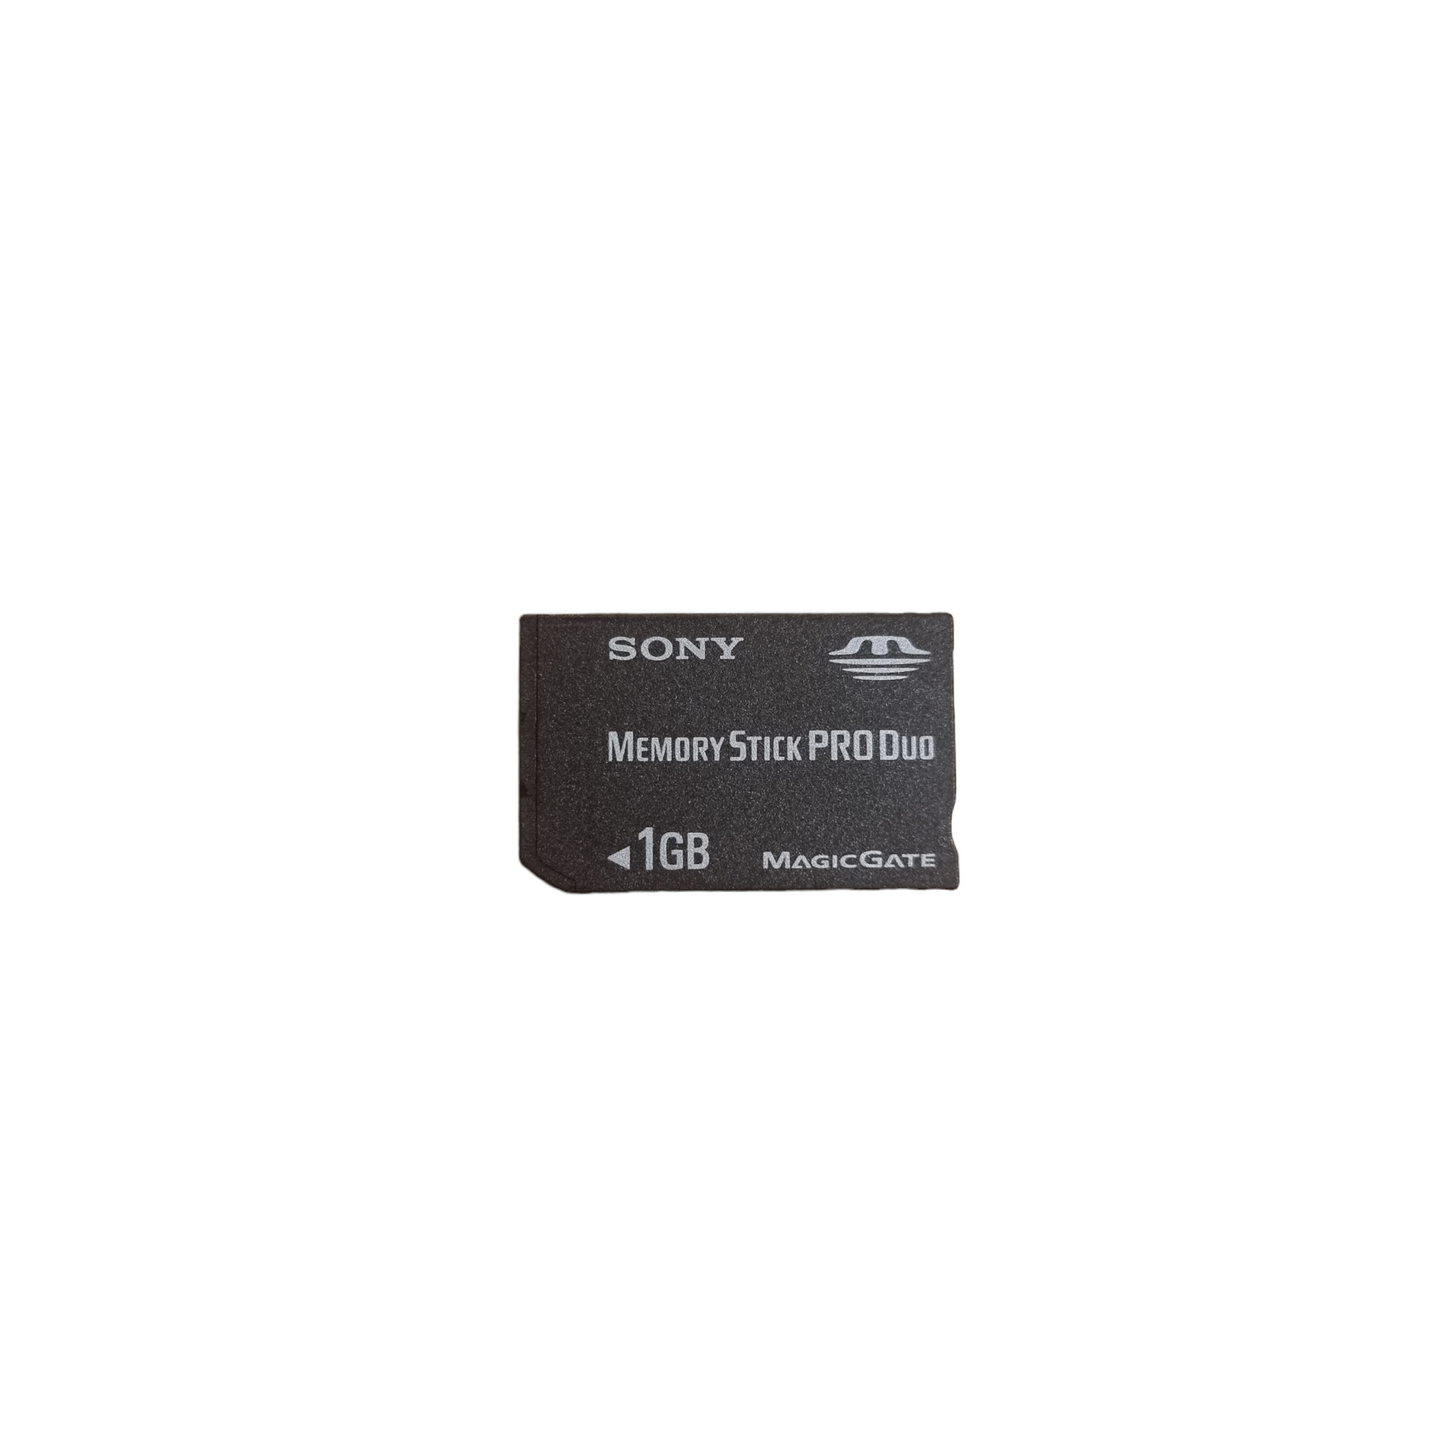 Sony Memory Stick Pro Duo - 1GB